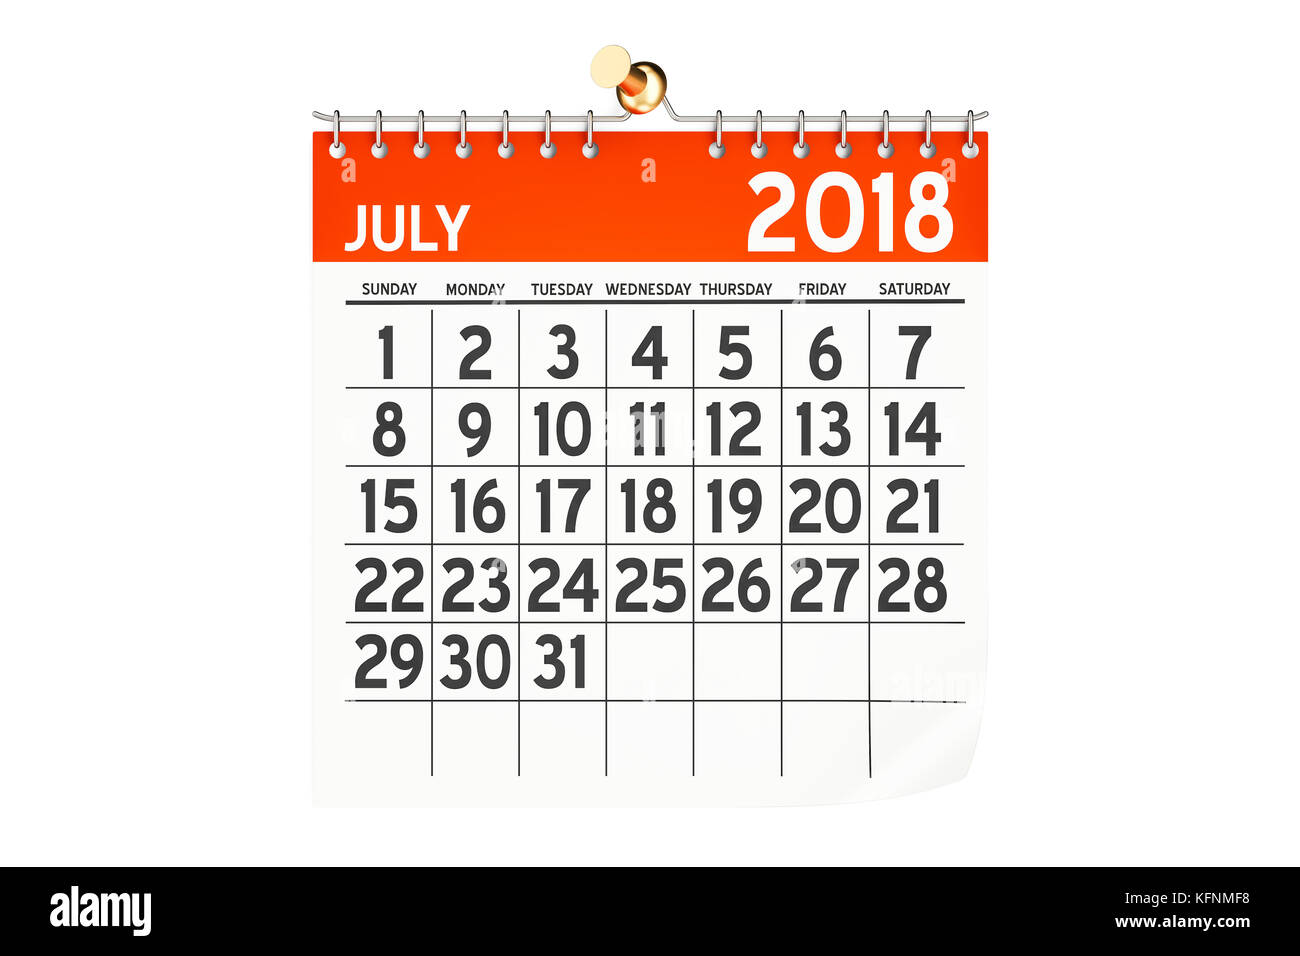 2018 Calendar Cards + Stamps